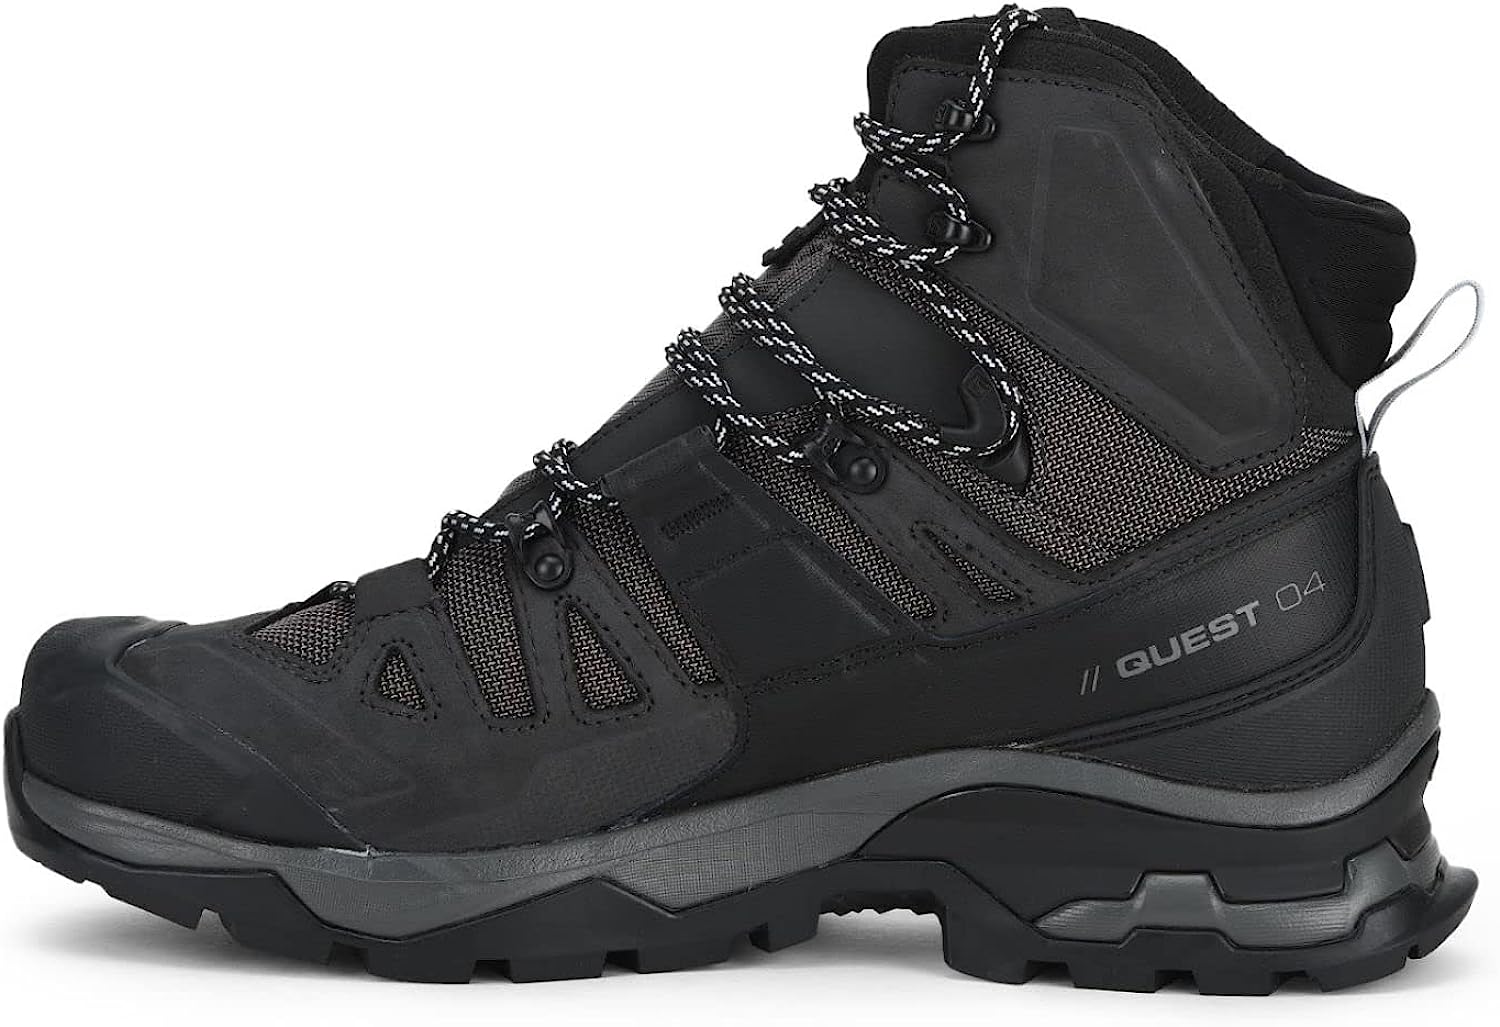 SALOMON Men's Quest 4 GTX High Rise Hiking Boots